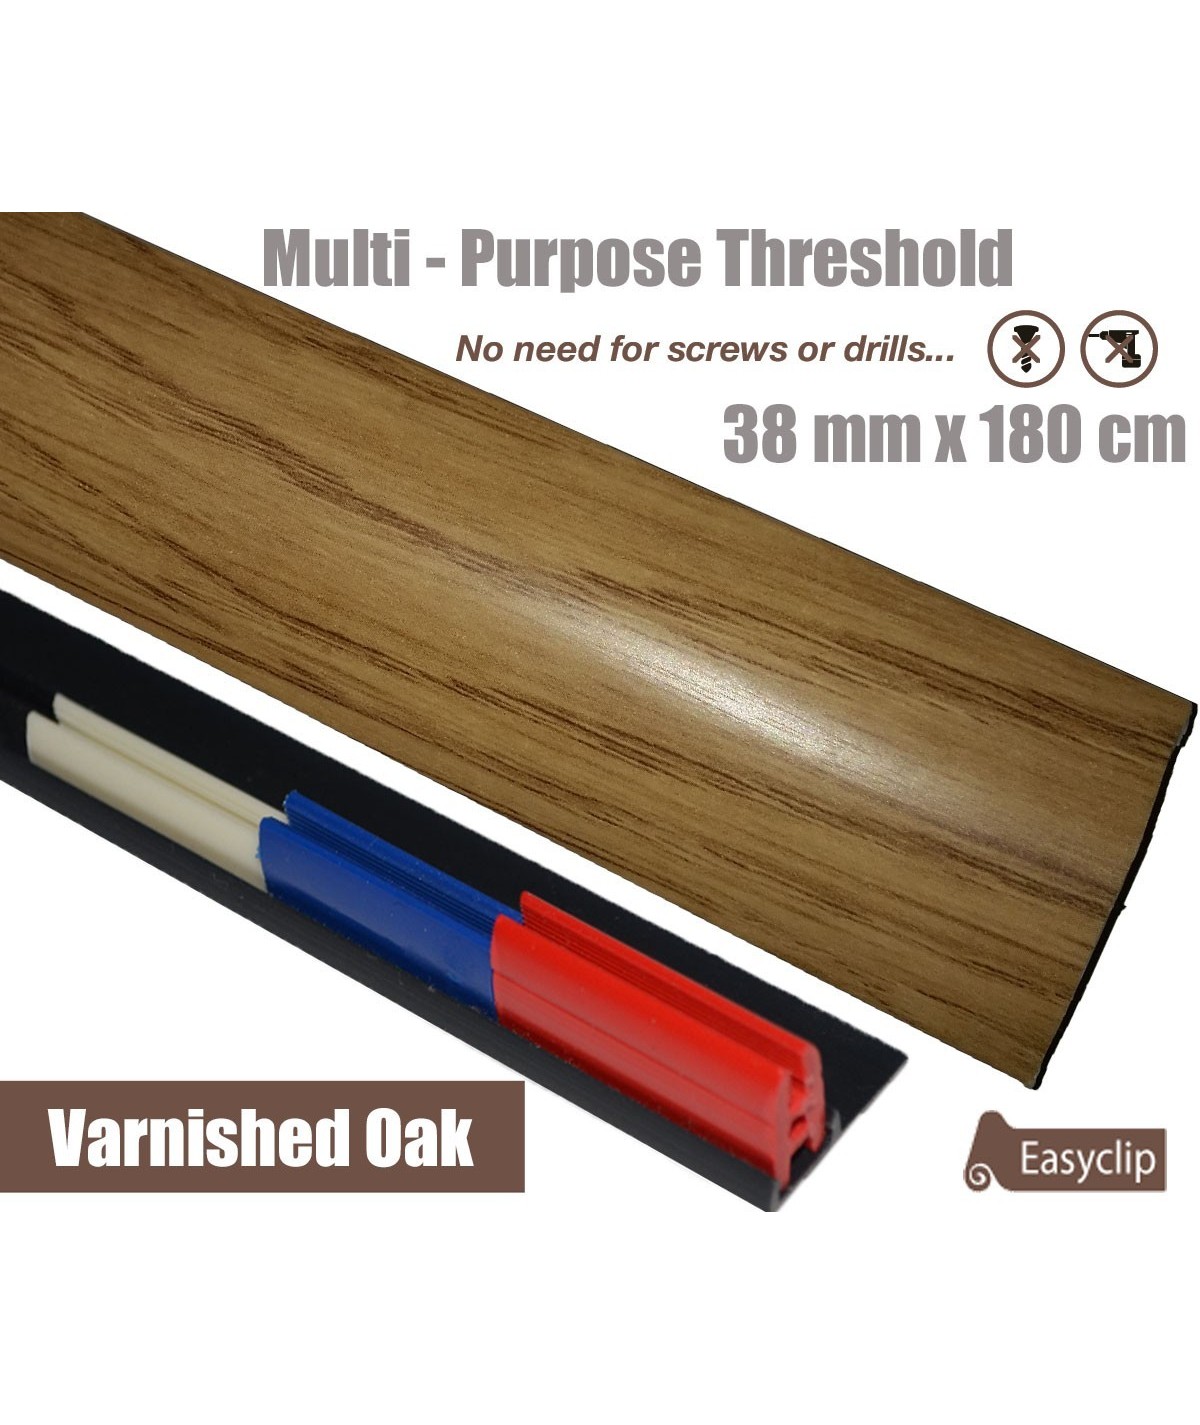 Varnished Oak Threshold Strip 38mm x 180cm laminate multi Purpose Adhesive Clip System